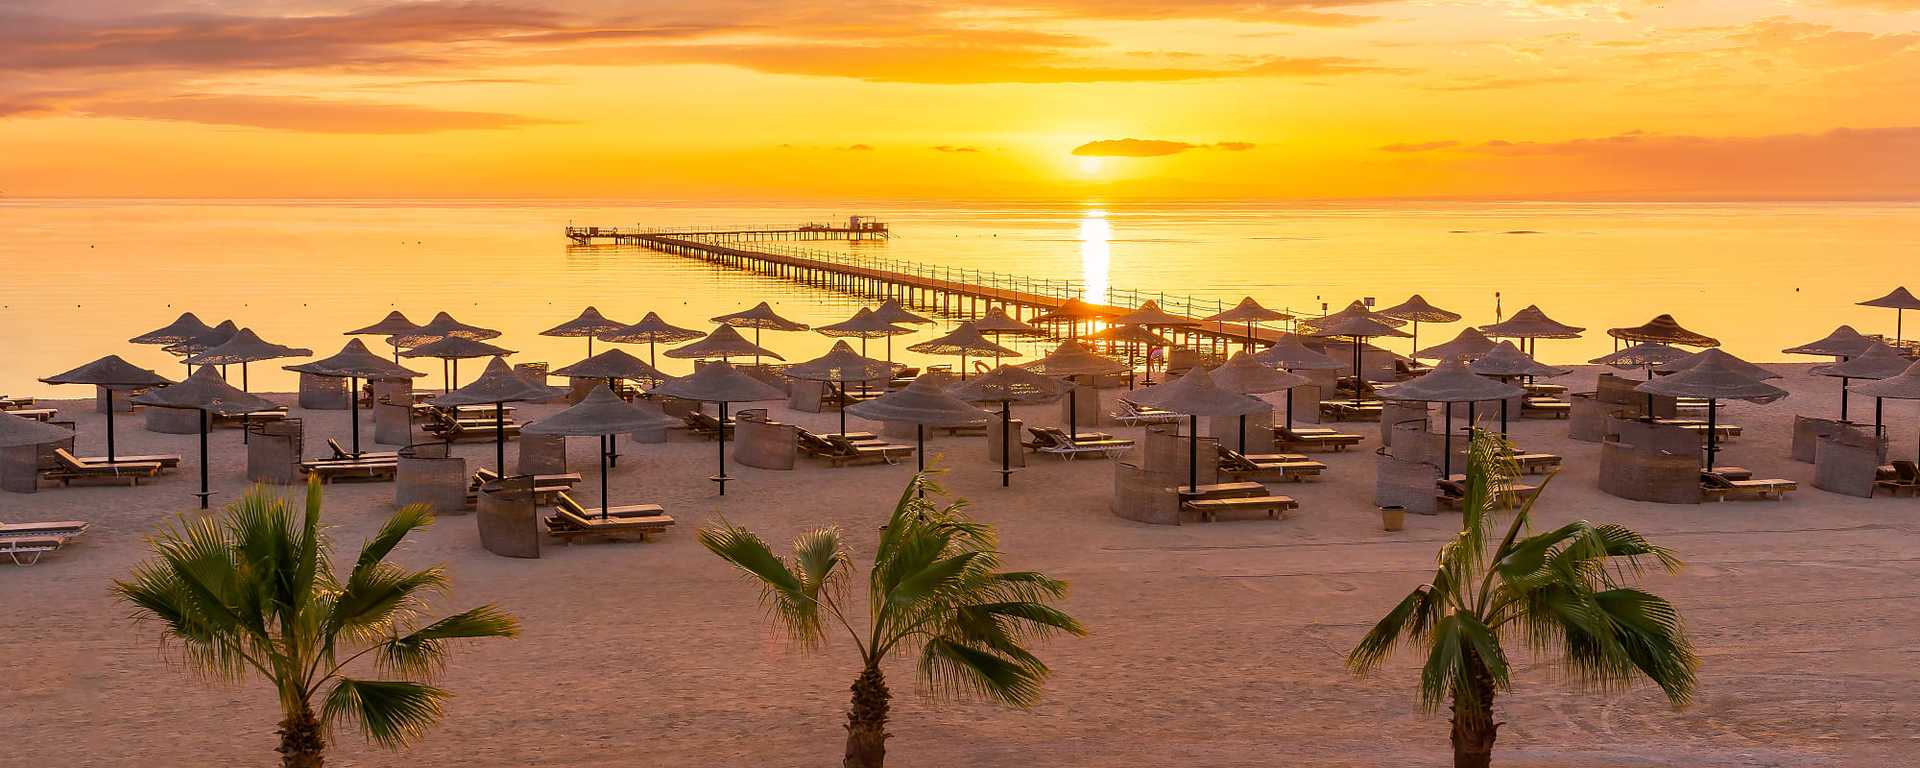 Sunrise at beach resort in Marsa Alam, Egypt